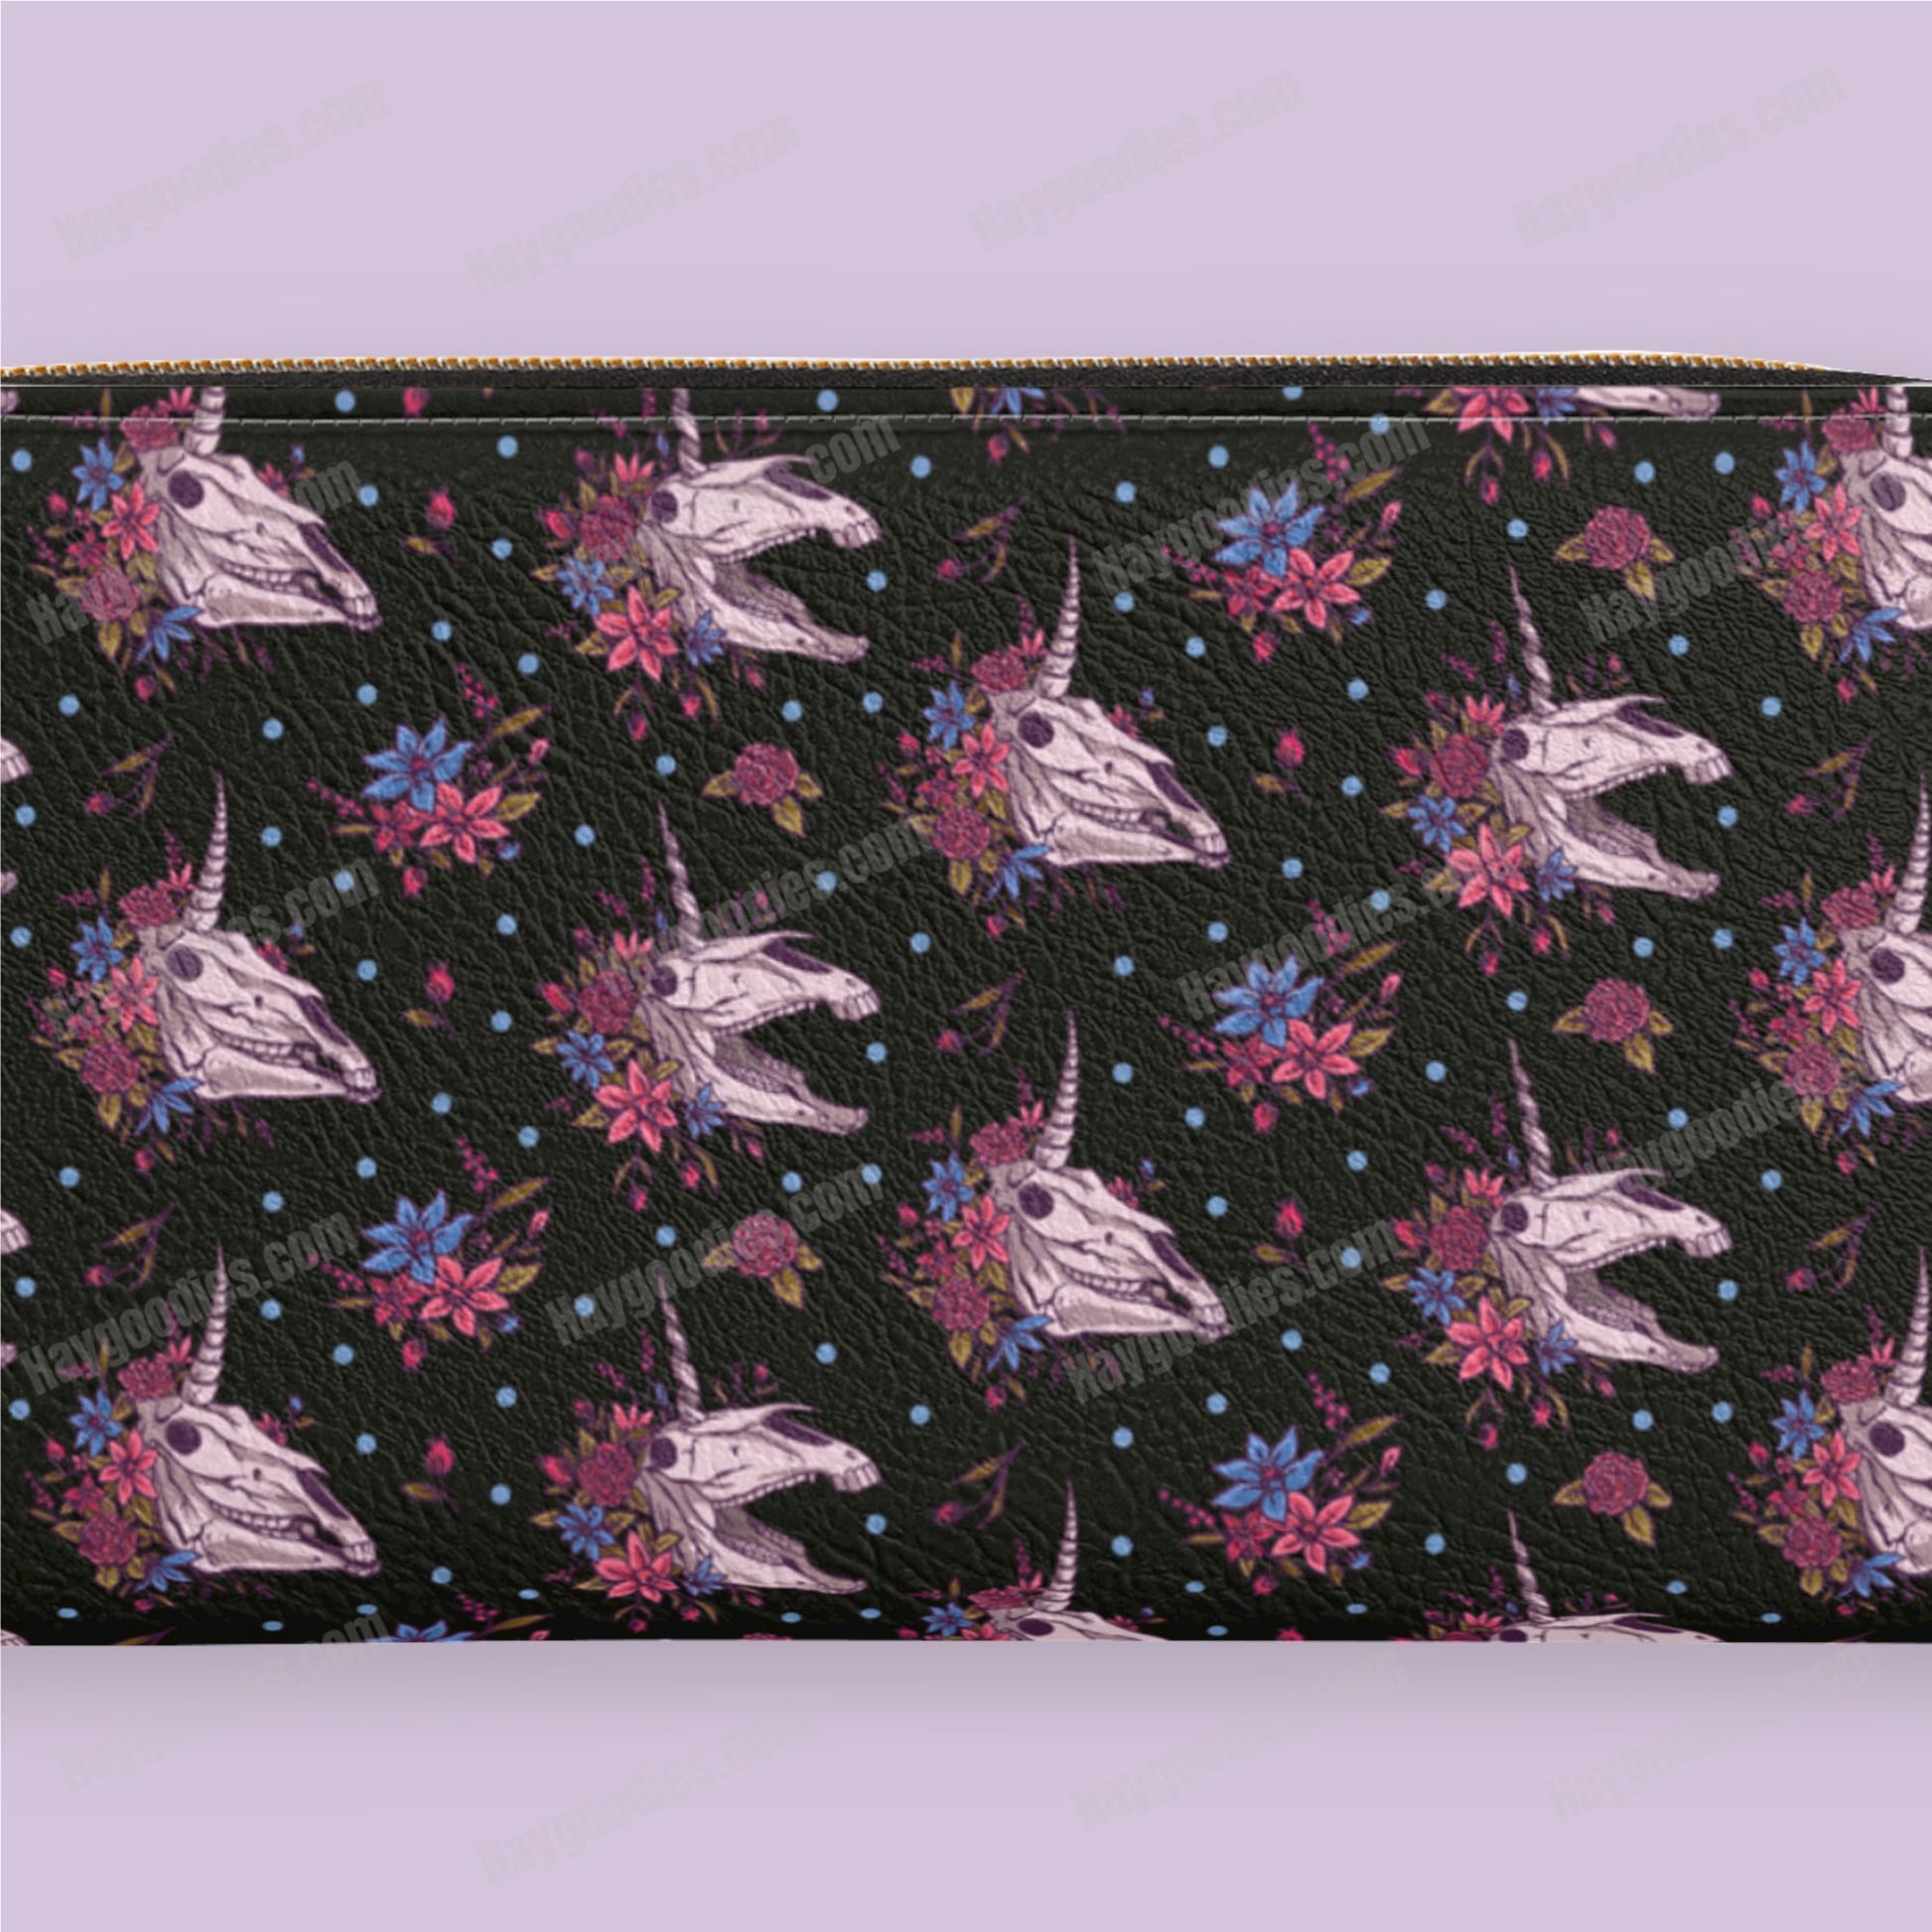 Floral Unicorn Skull Zipper Purse - HayGoodies - purse